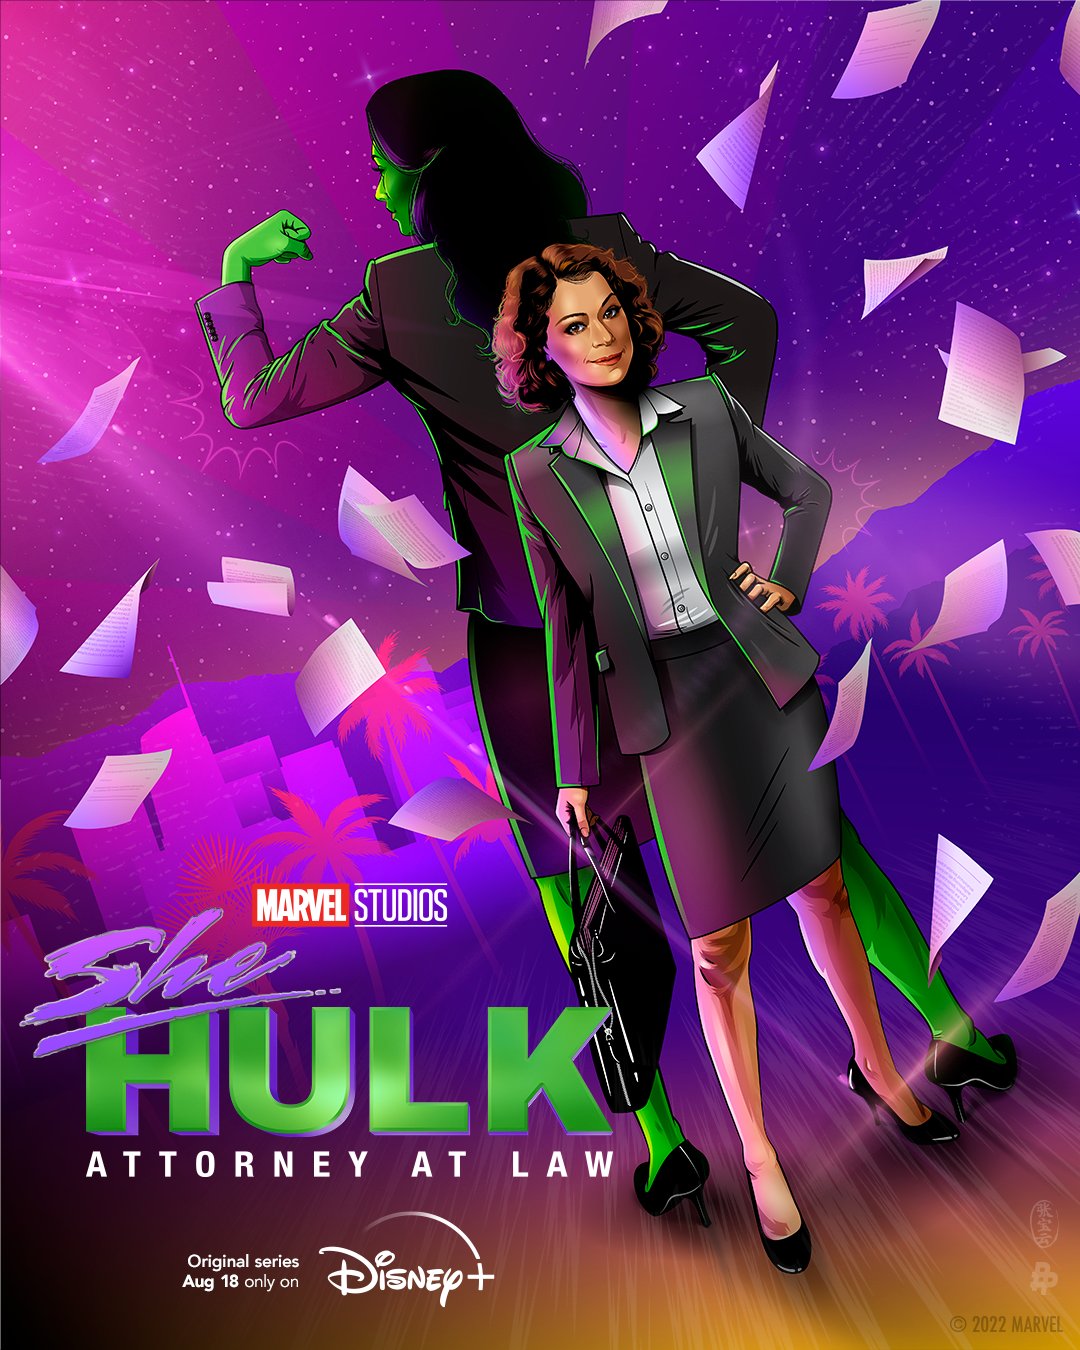 Artwork by Disney Plus – She Hulk